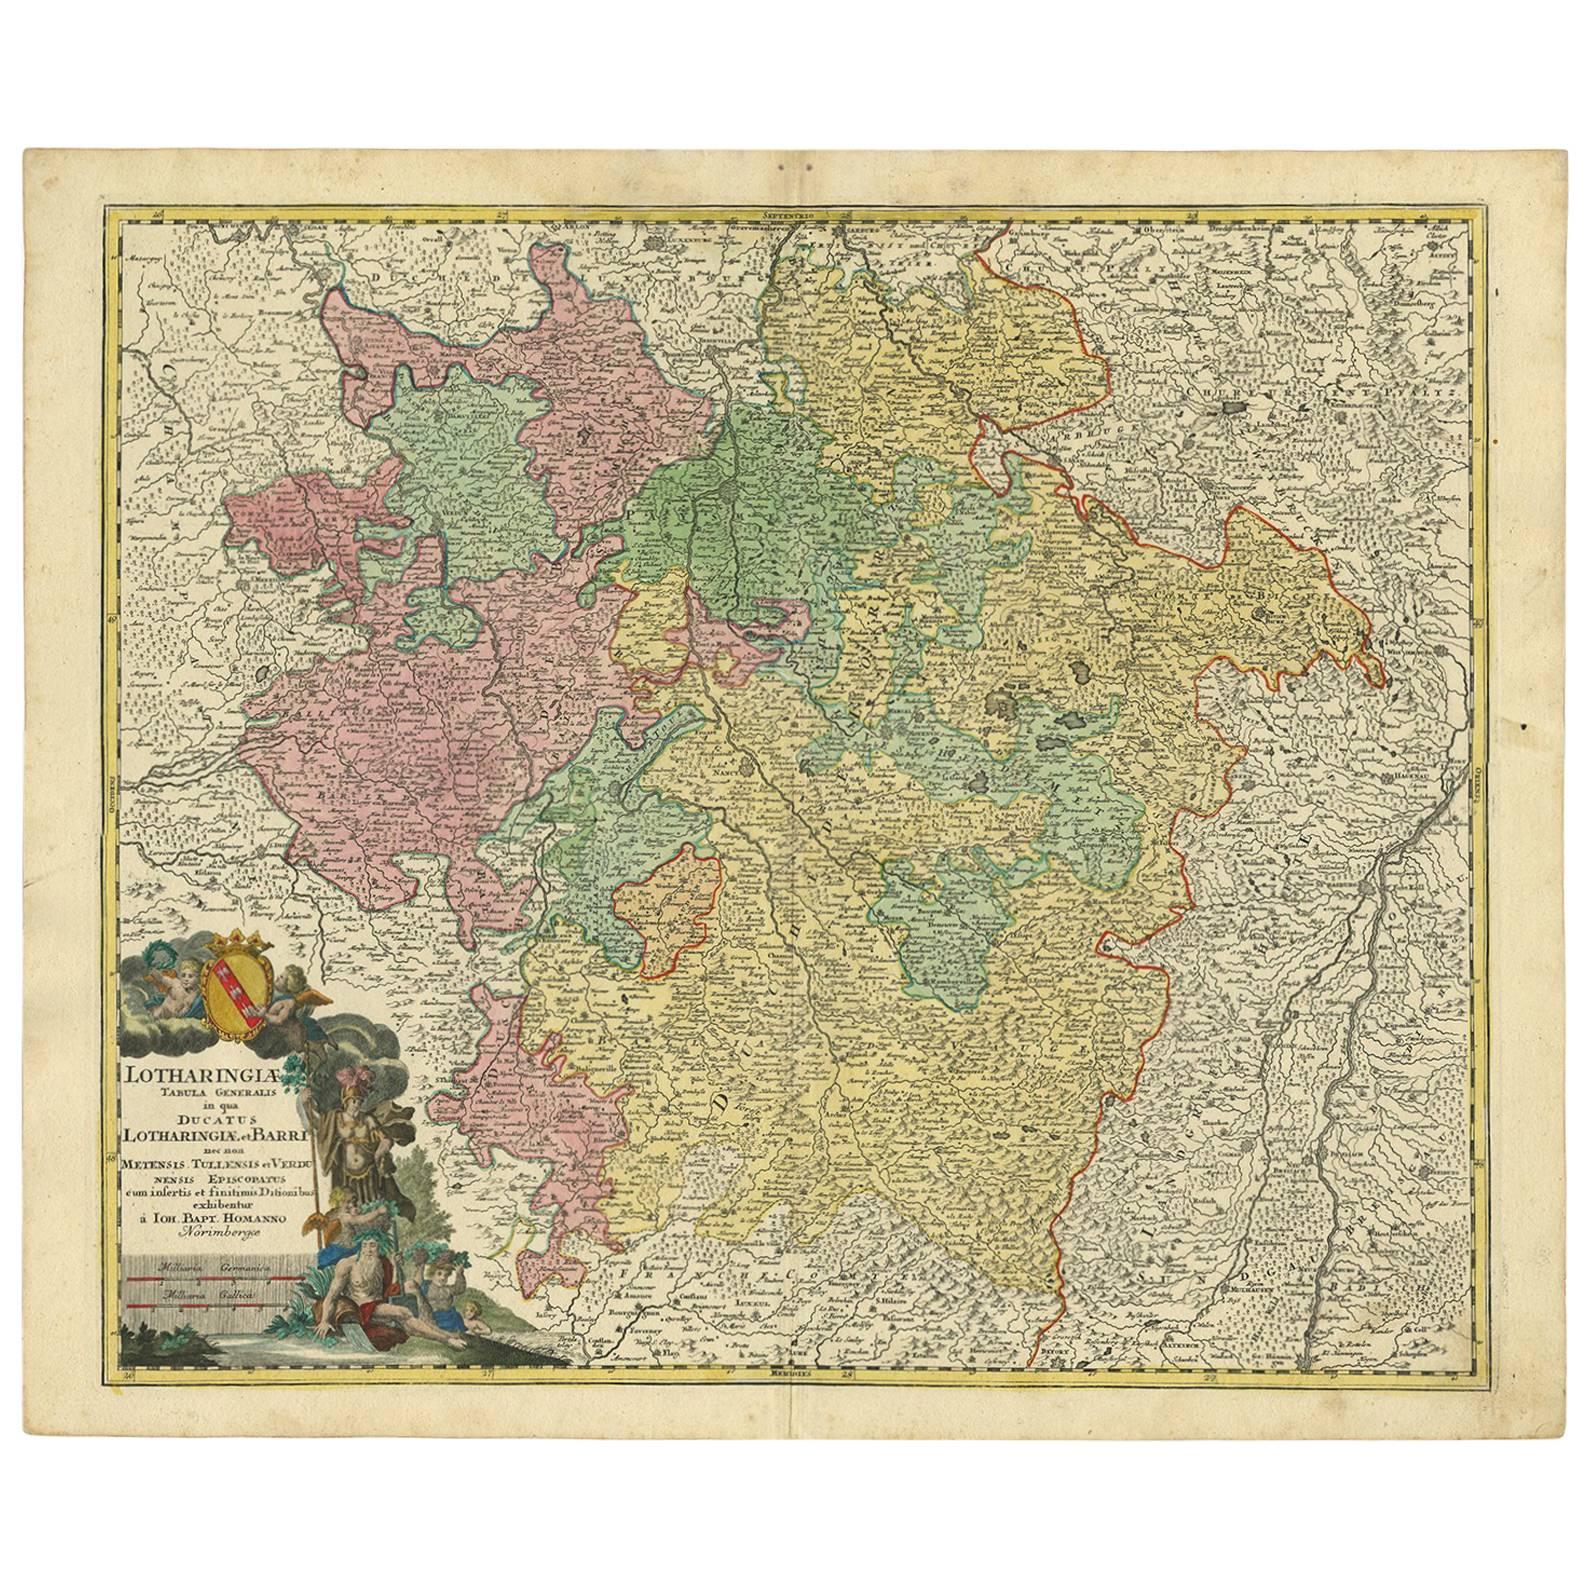 Antique Map of the Lorraine 'North-East France' by J. B. Homann, circa 1720